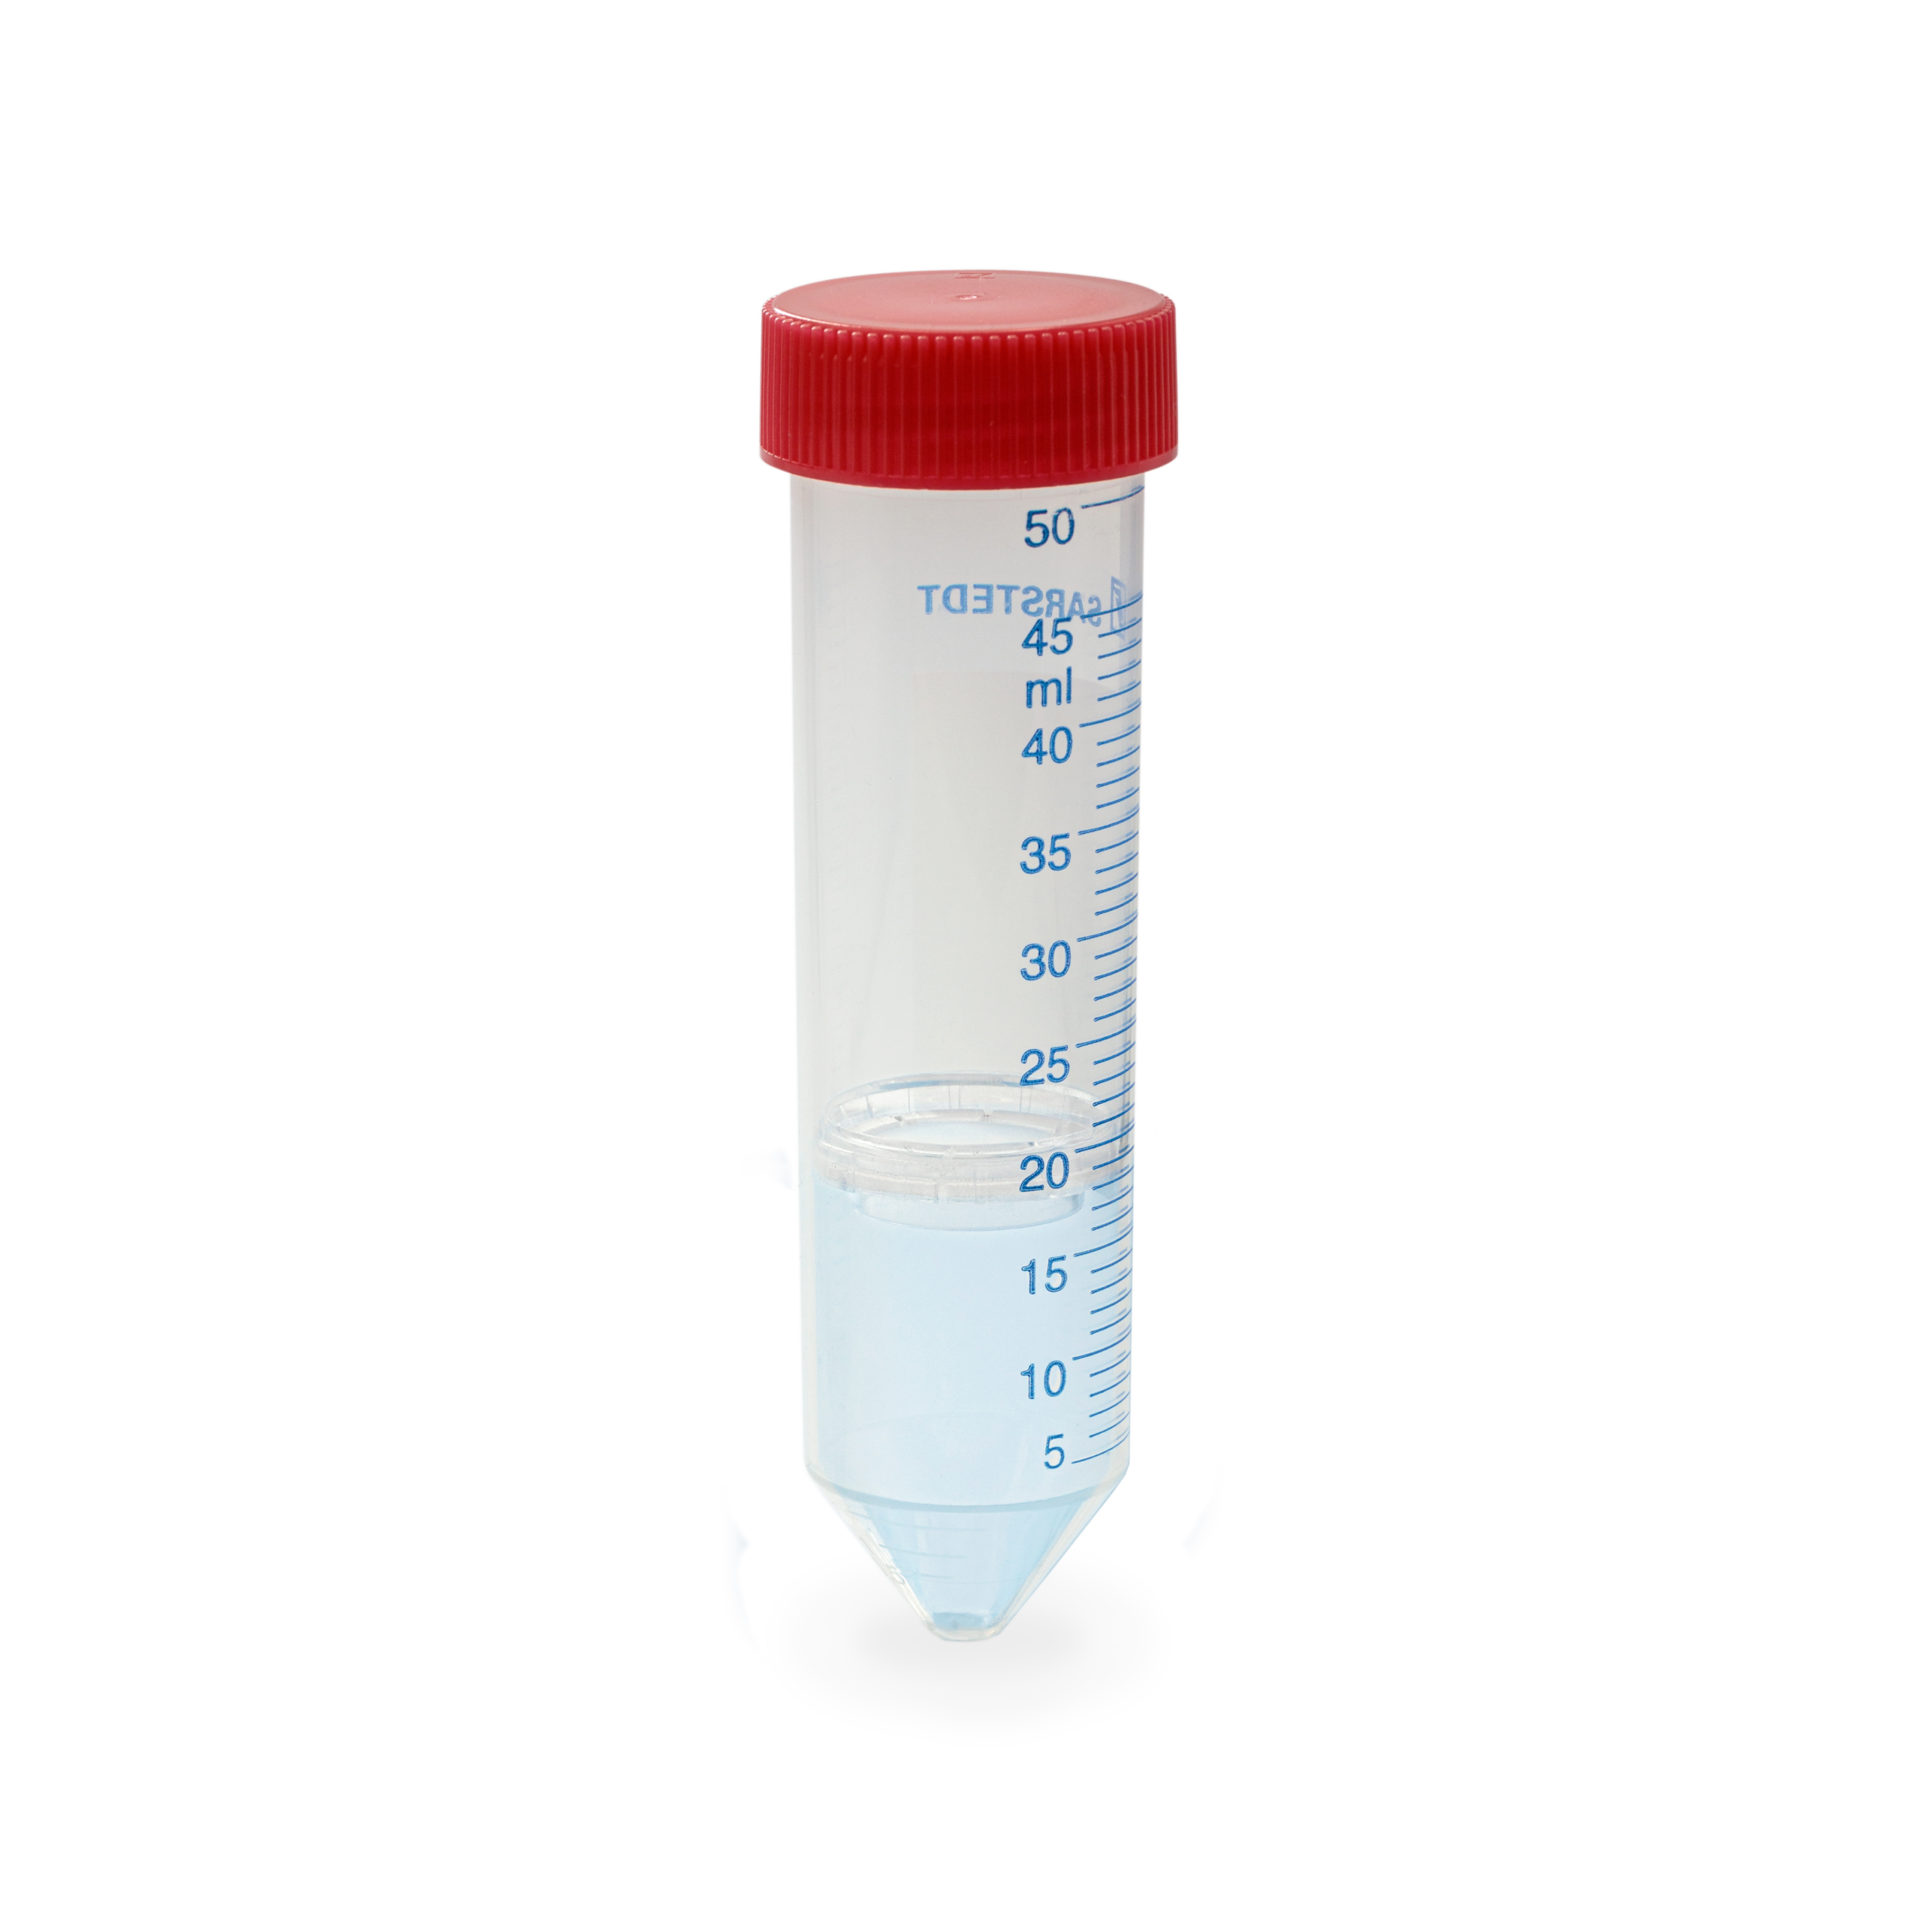 Plurimate 50 ml , sterile, prefilled PBMC 24+ Spin (1.072 g/ml)